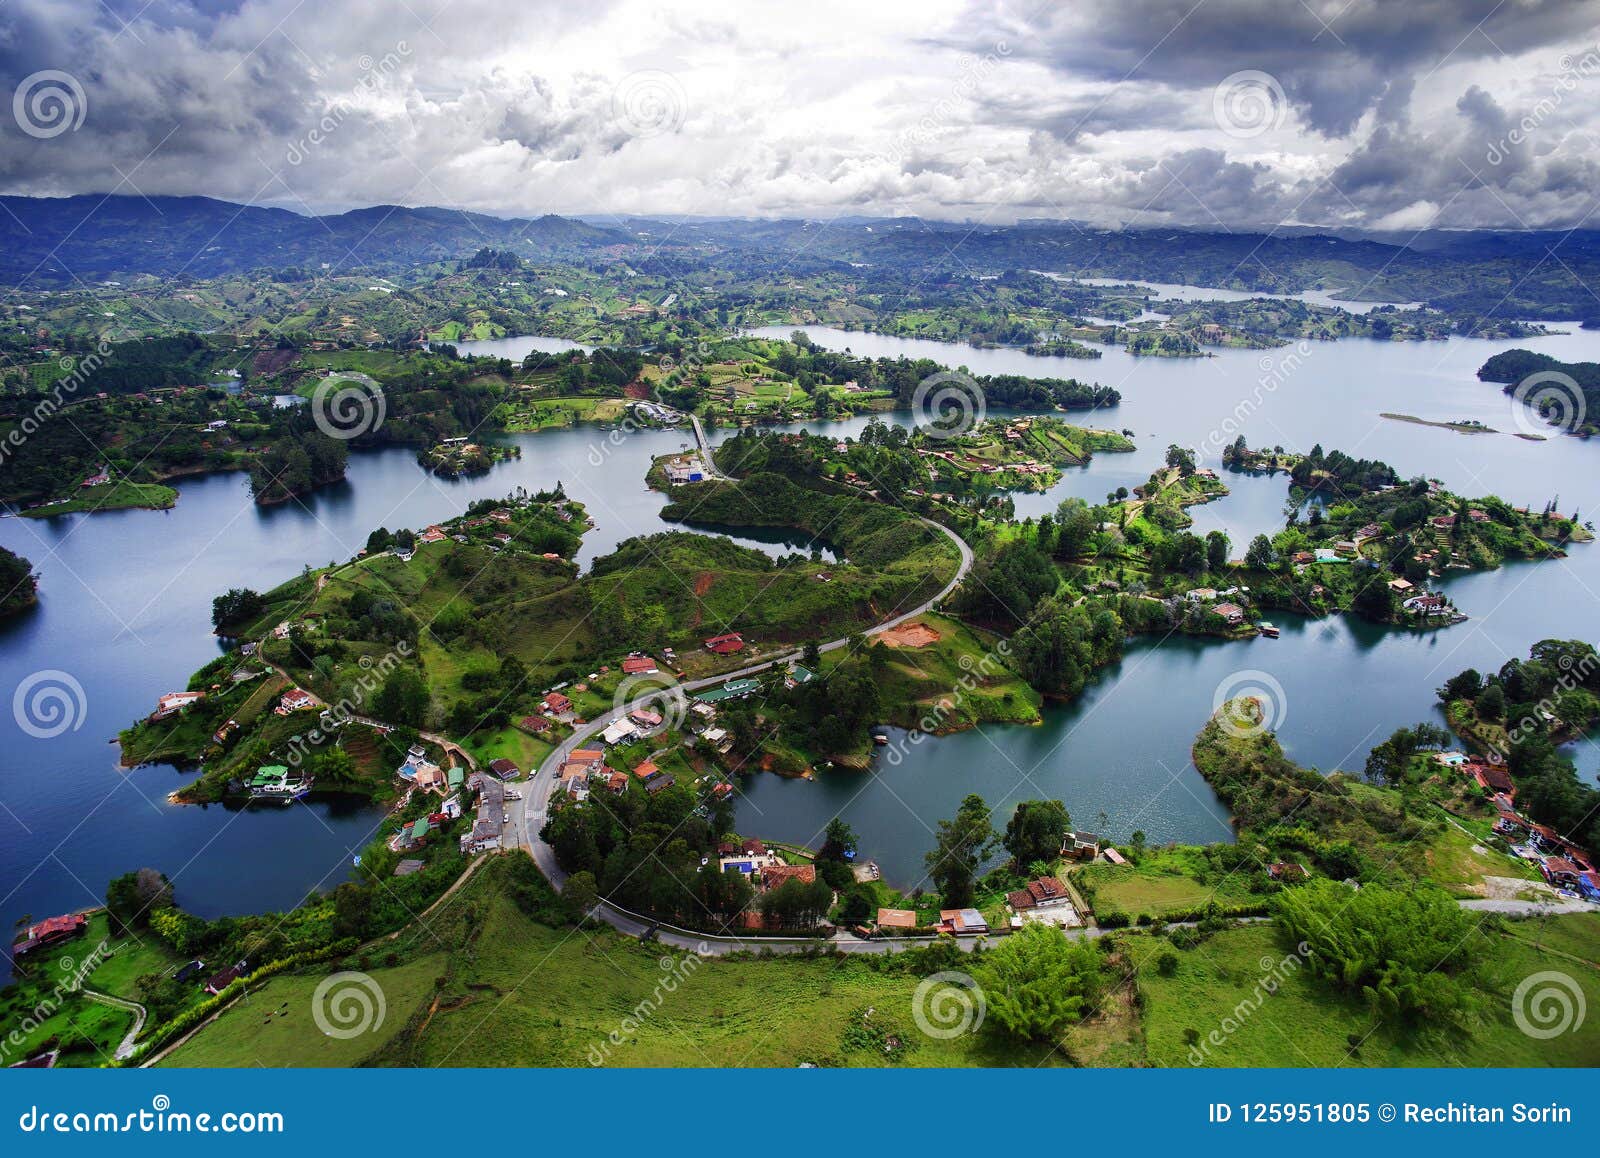 the picturesque guatape lake - el penol - in antioquia department, seen from el penon de guatape